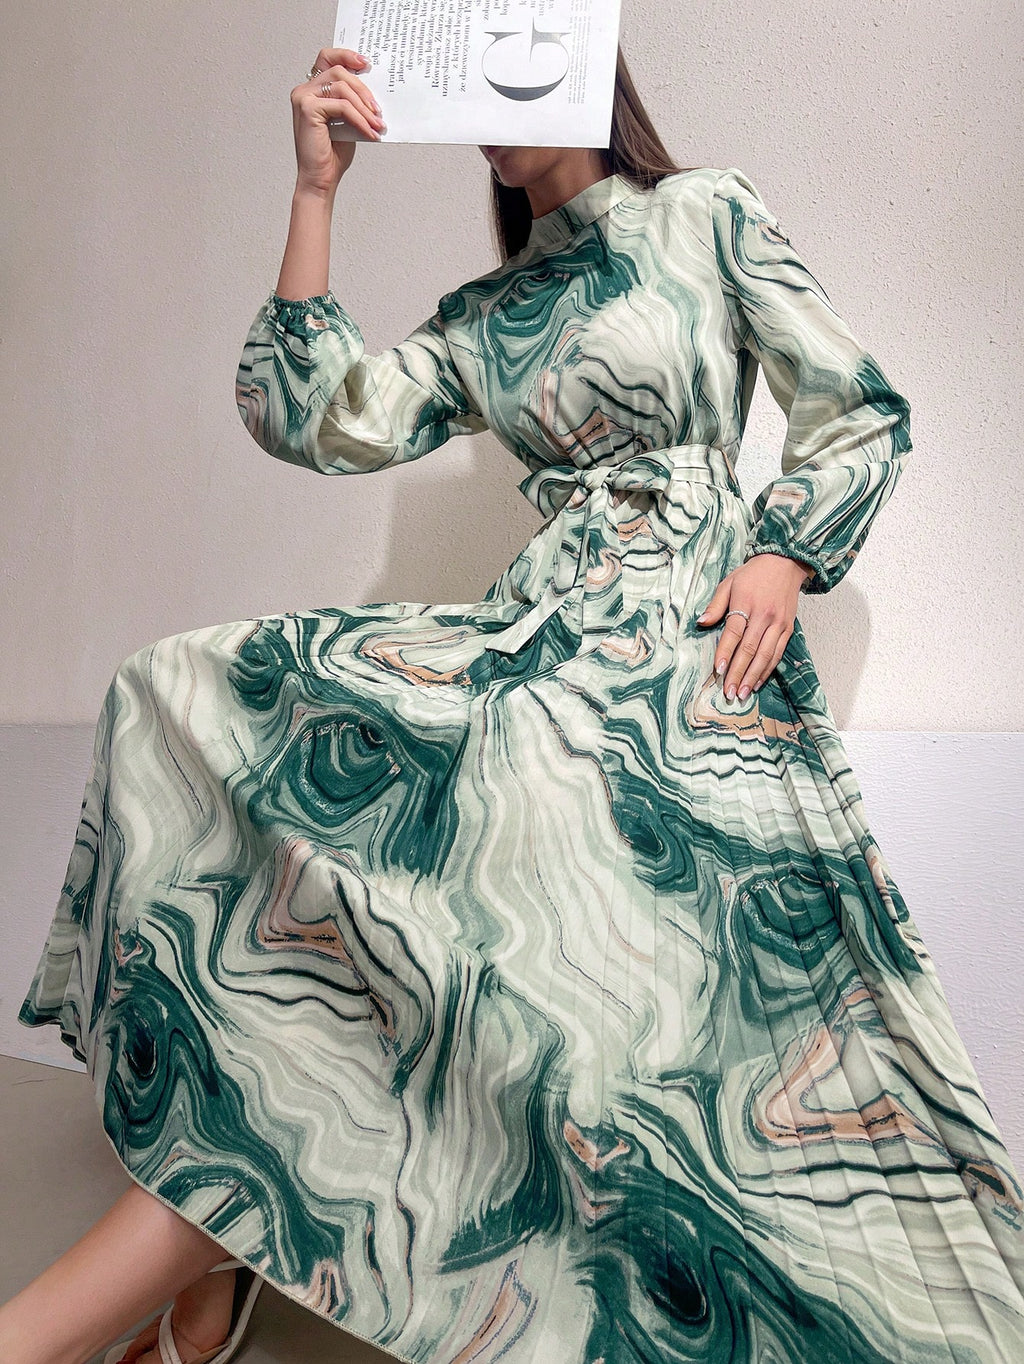 SHEIN Mulvari Women'S Marble Printed Lantern Sleeve Dress